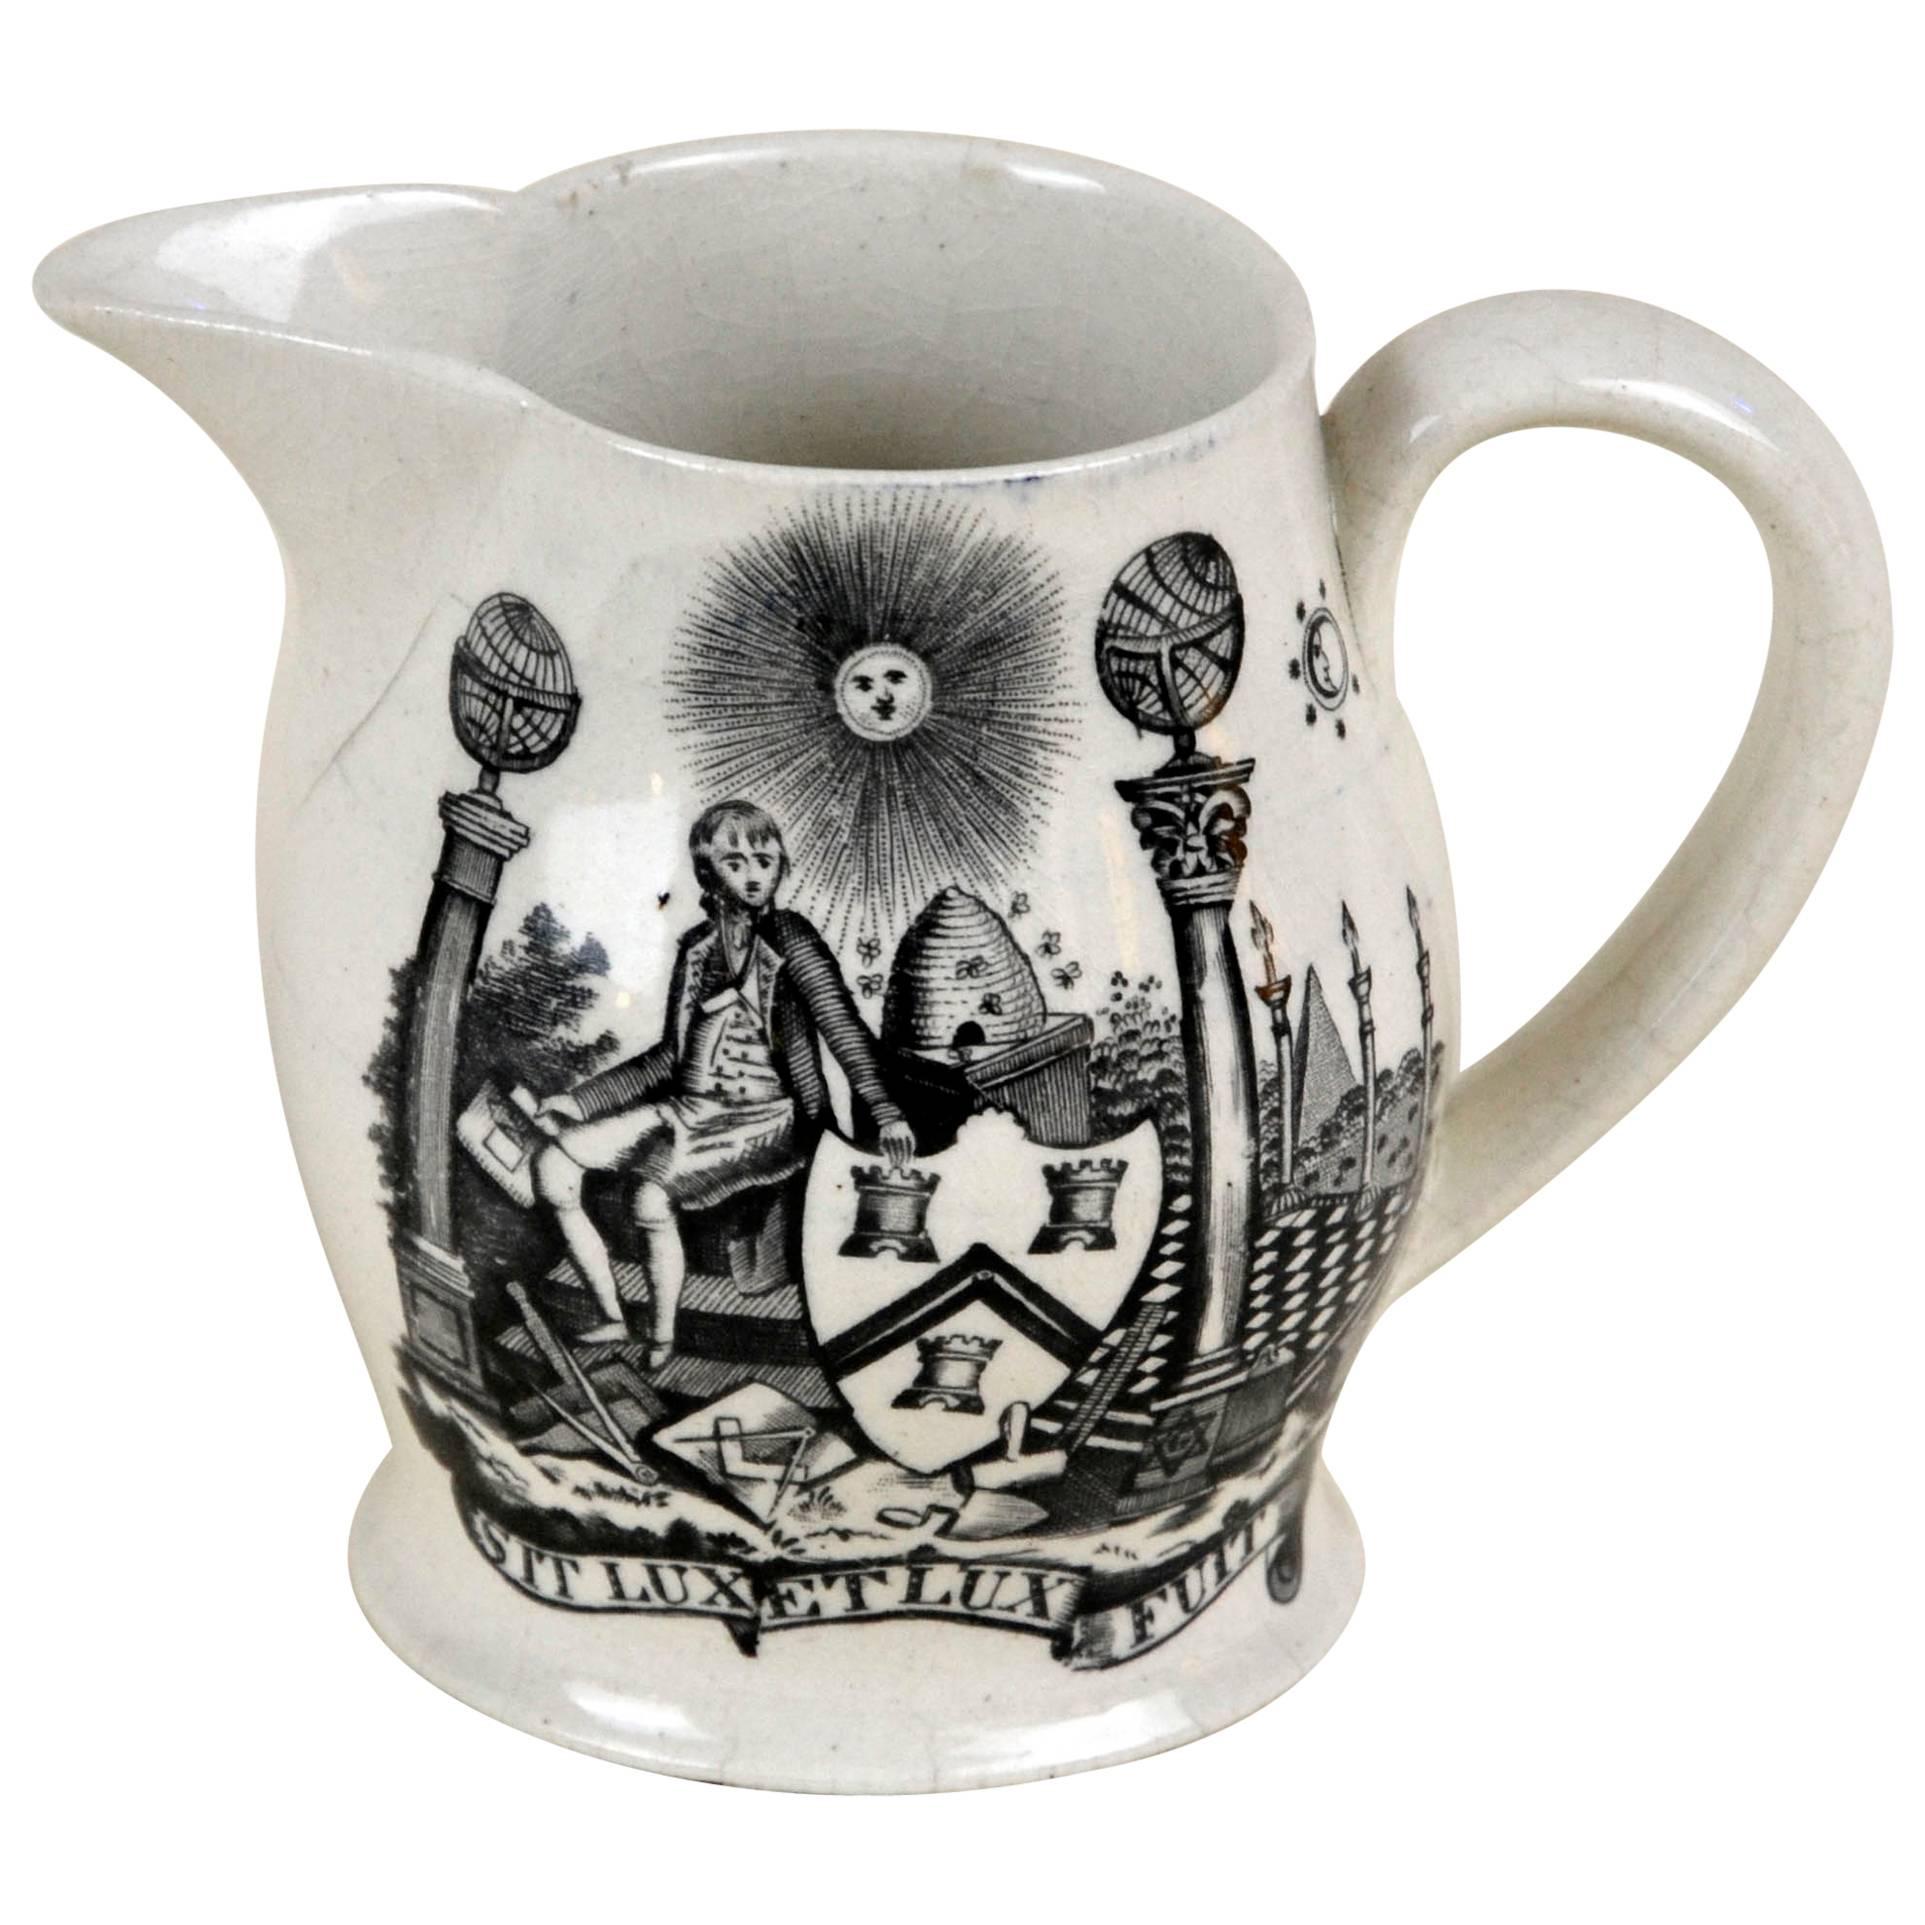 1820s Masonic Creamware Jug with Black Transfer Prints of Masonic Symbols For Sale